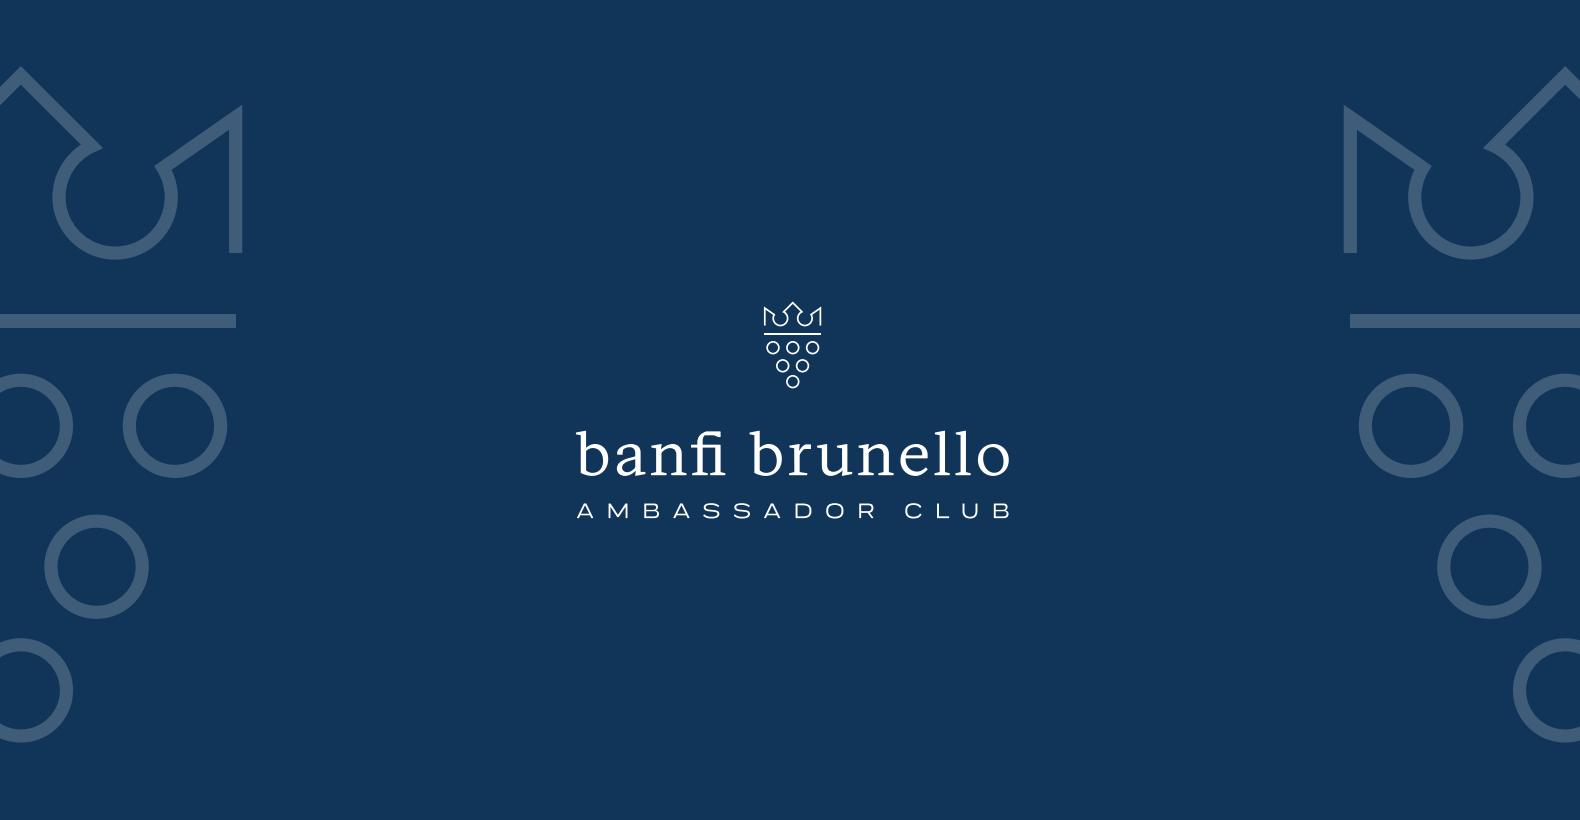 Banfi Brunello Ambassador Club